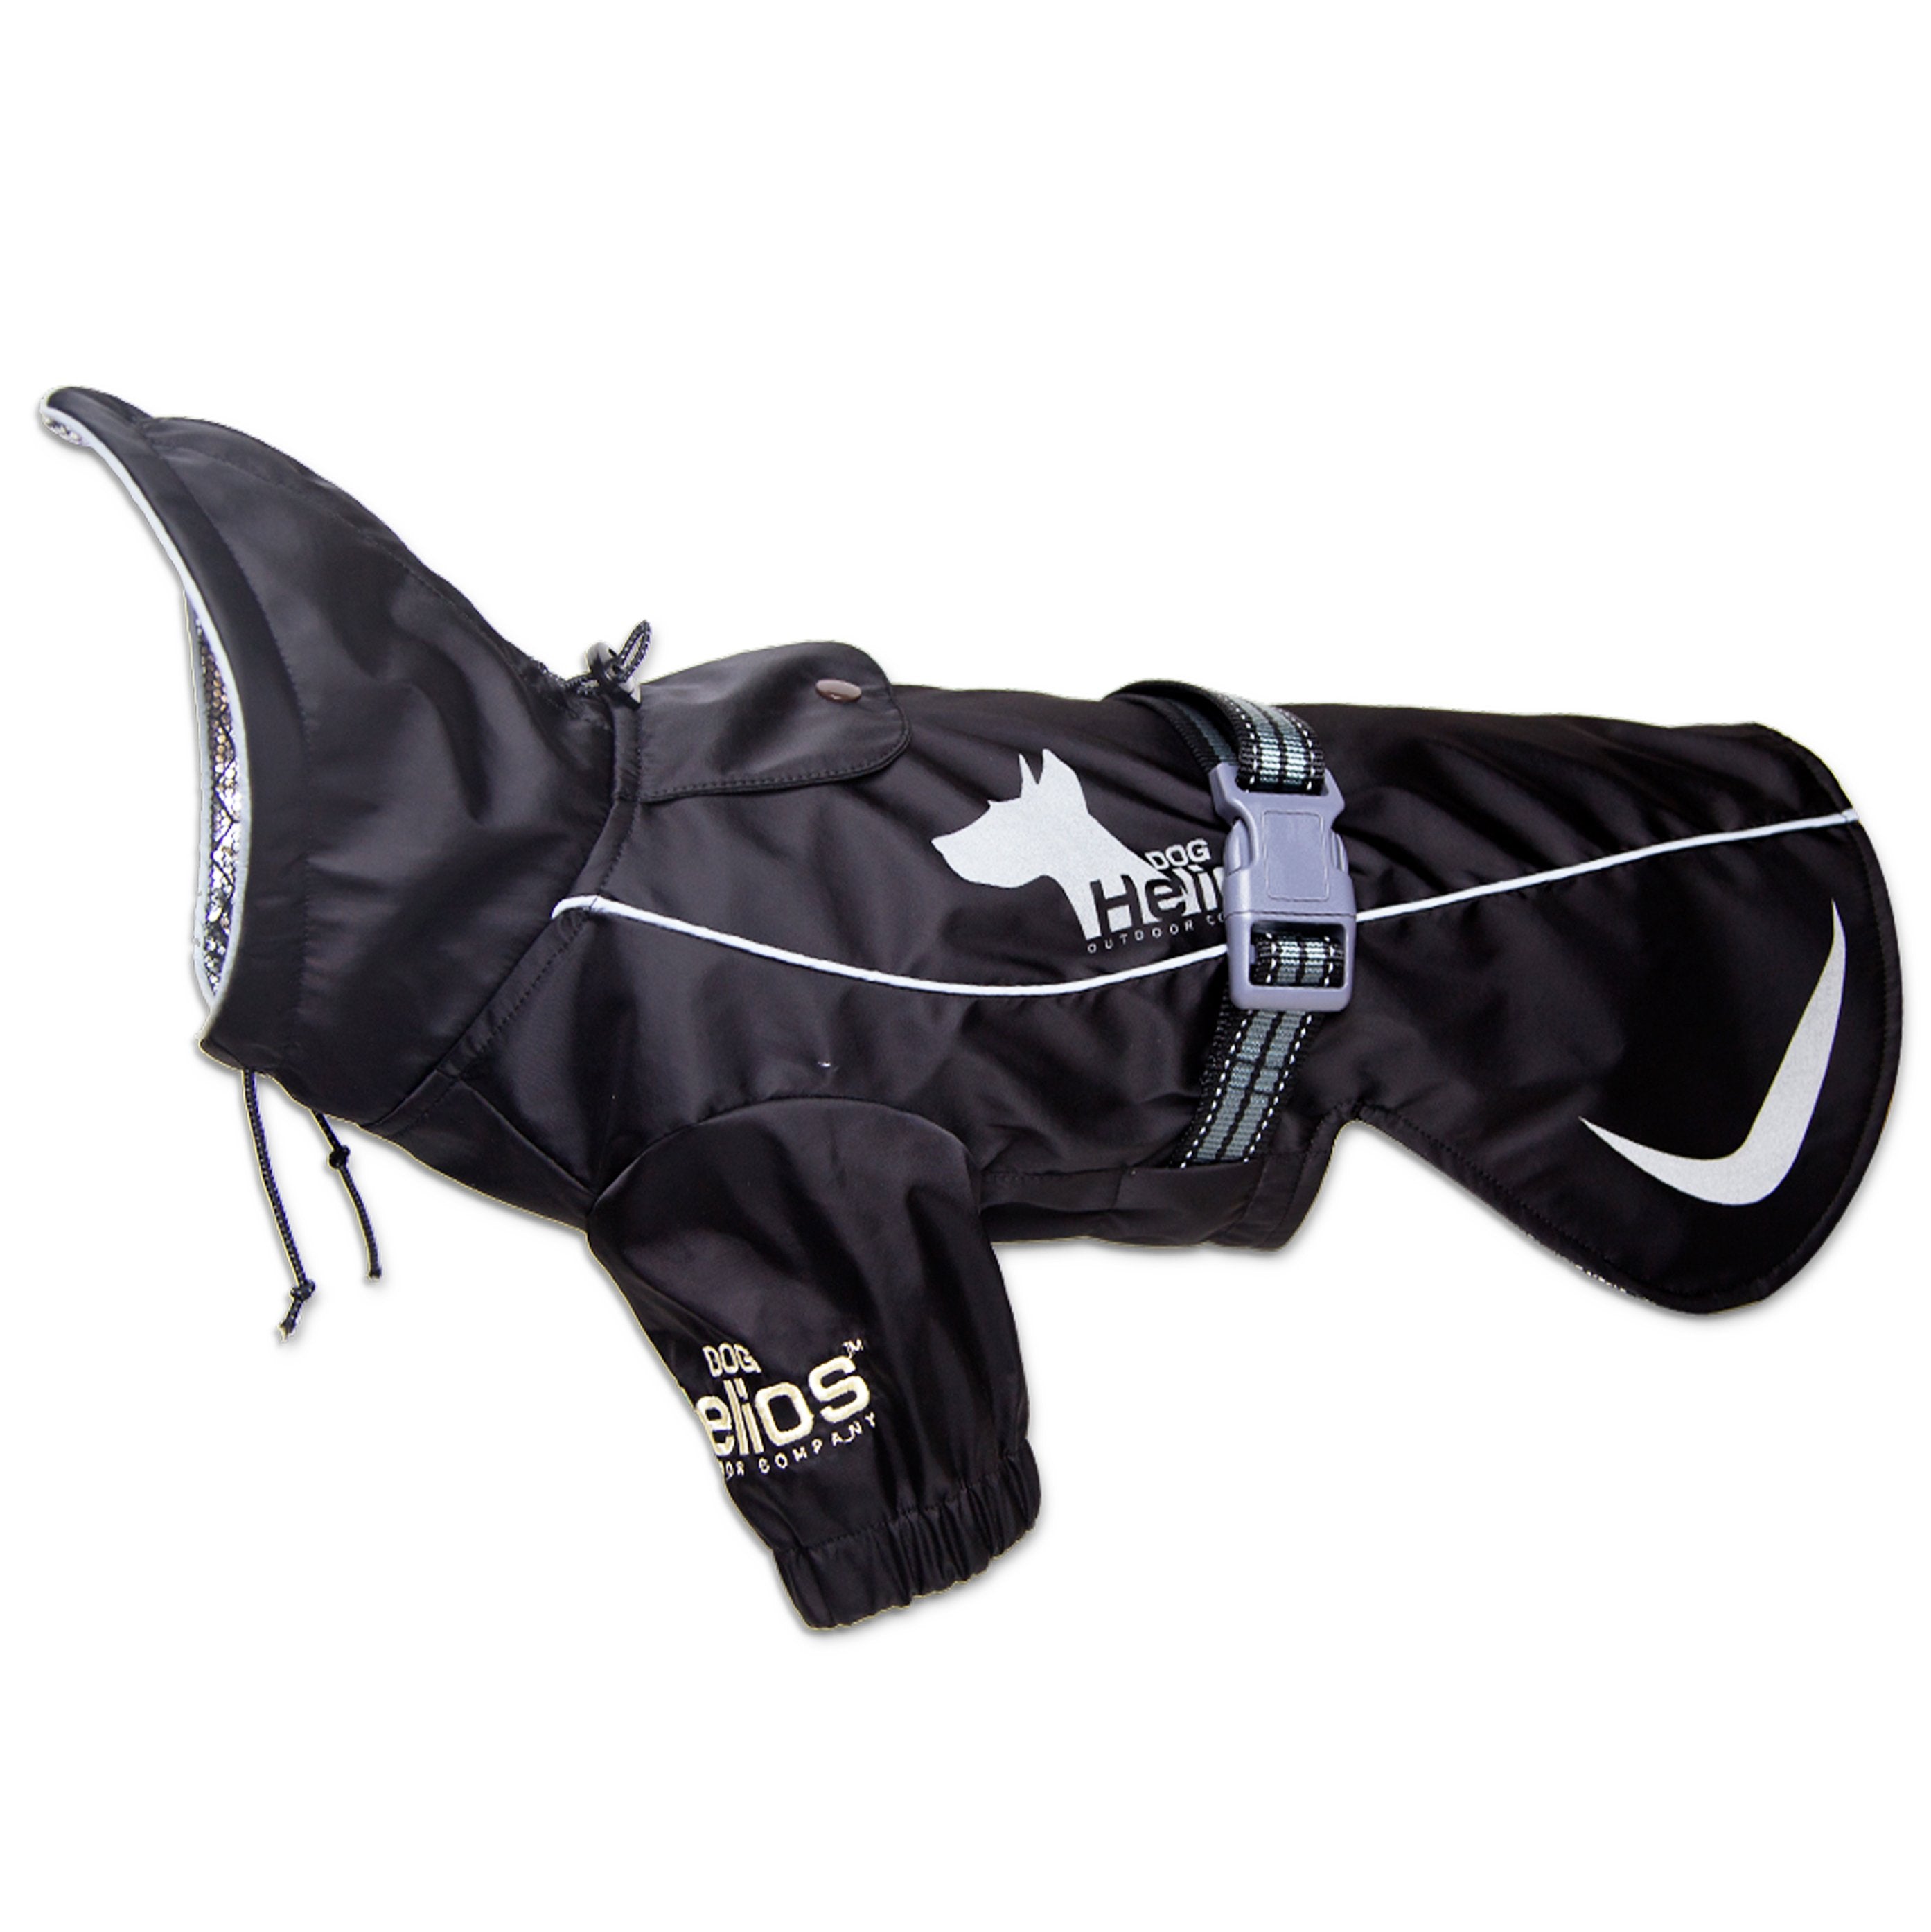 Dog Helios® 'Ice-Breaker' Hooded Dog Coat W/ Heat Reflective Tech - Black - Medium